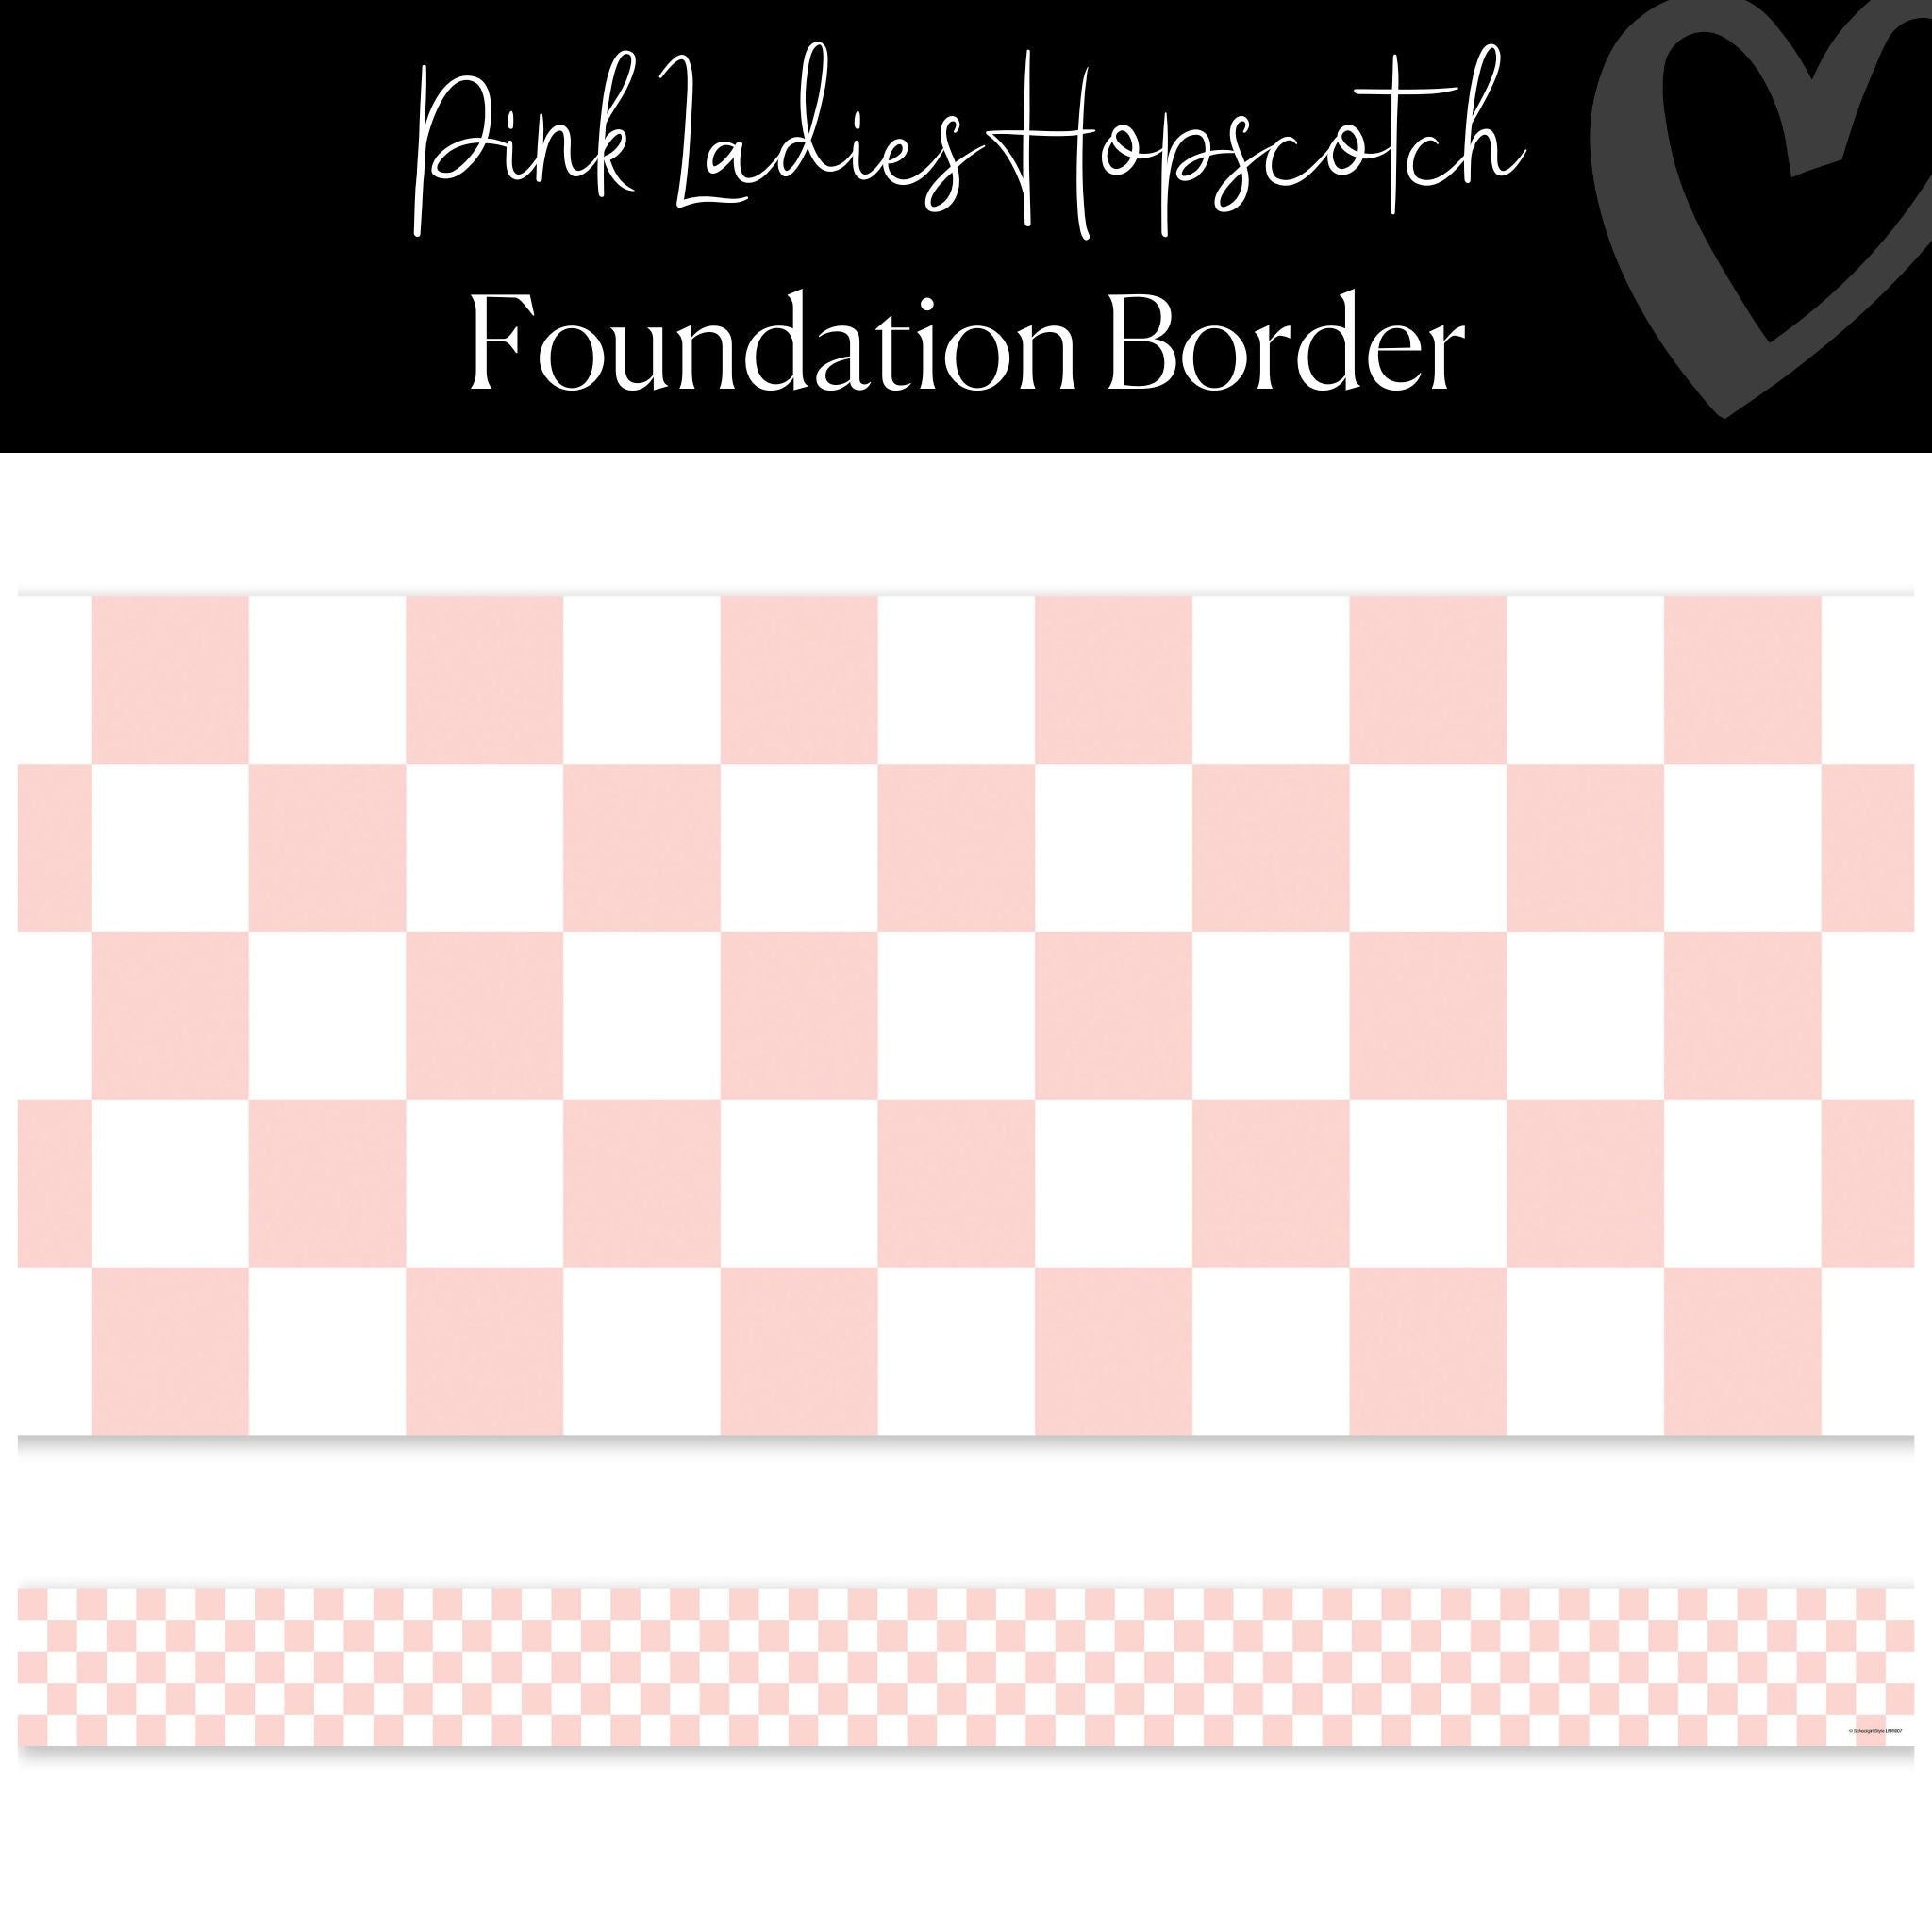 Pink Ladies Hopscotch, Bulletin Board Border